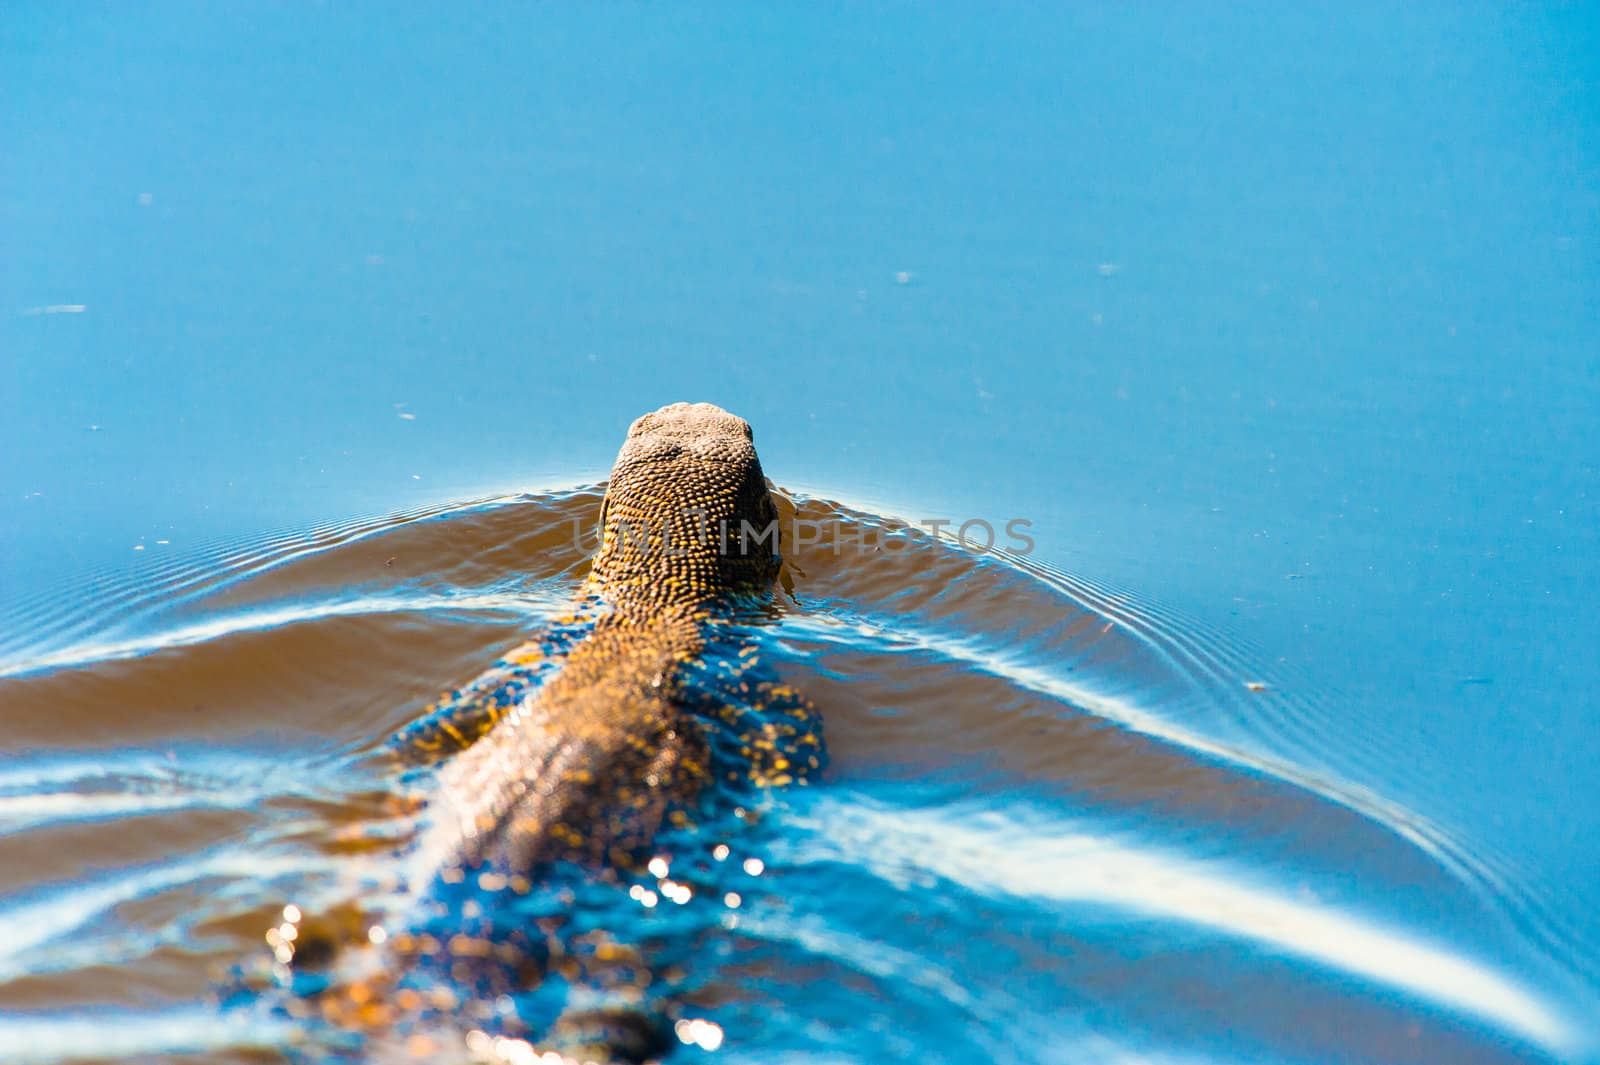 Swimming Nile monitor lizard (Varanus niloticus), Chobe National Park